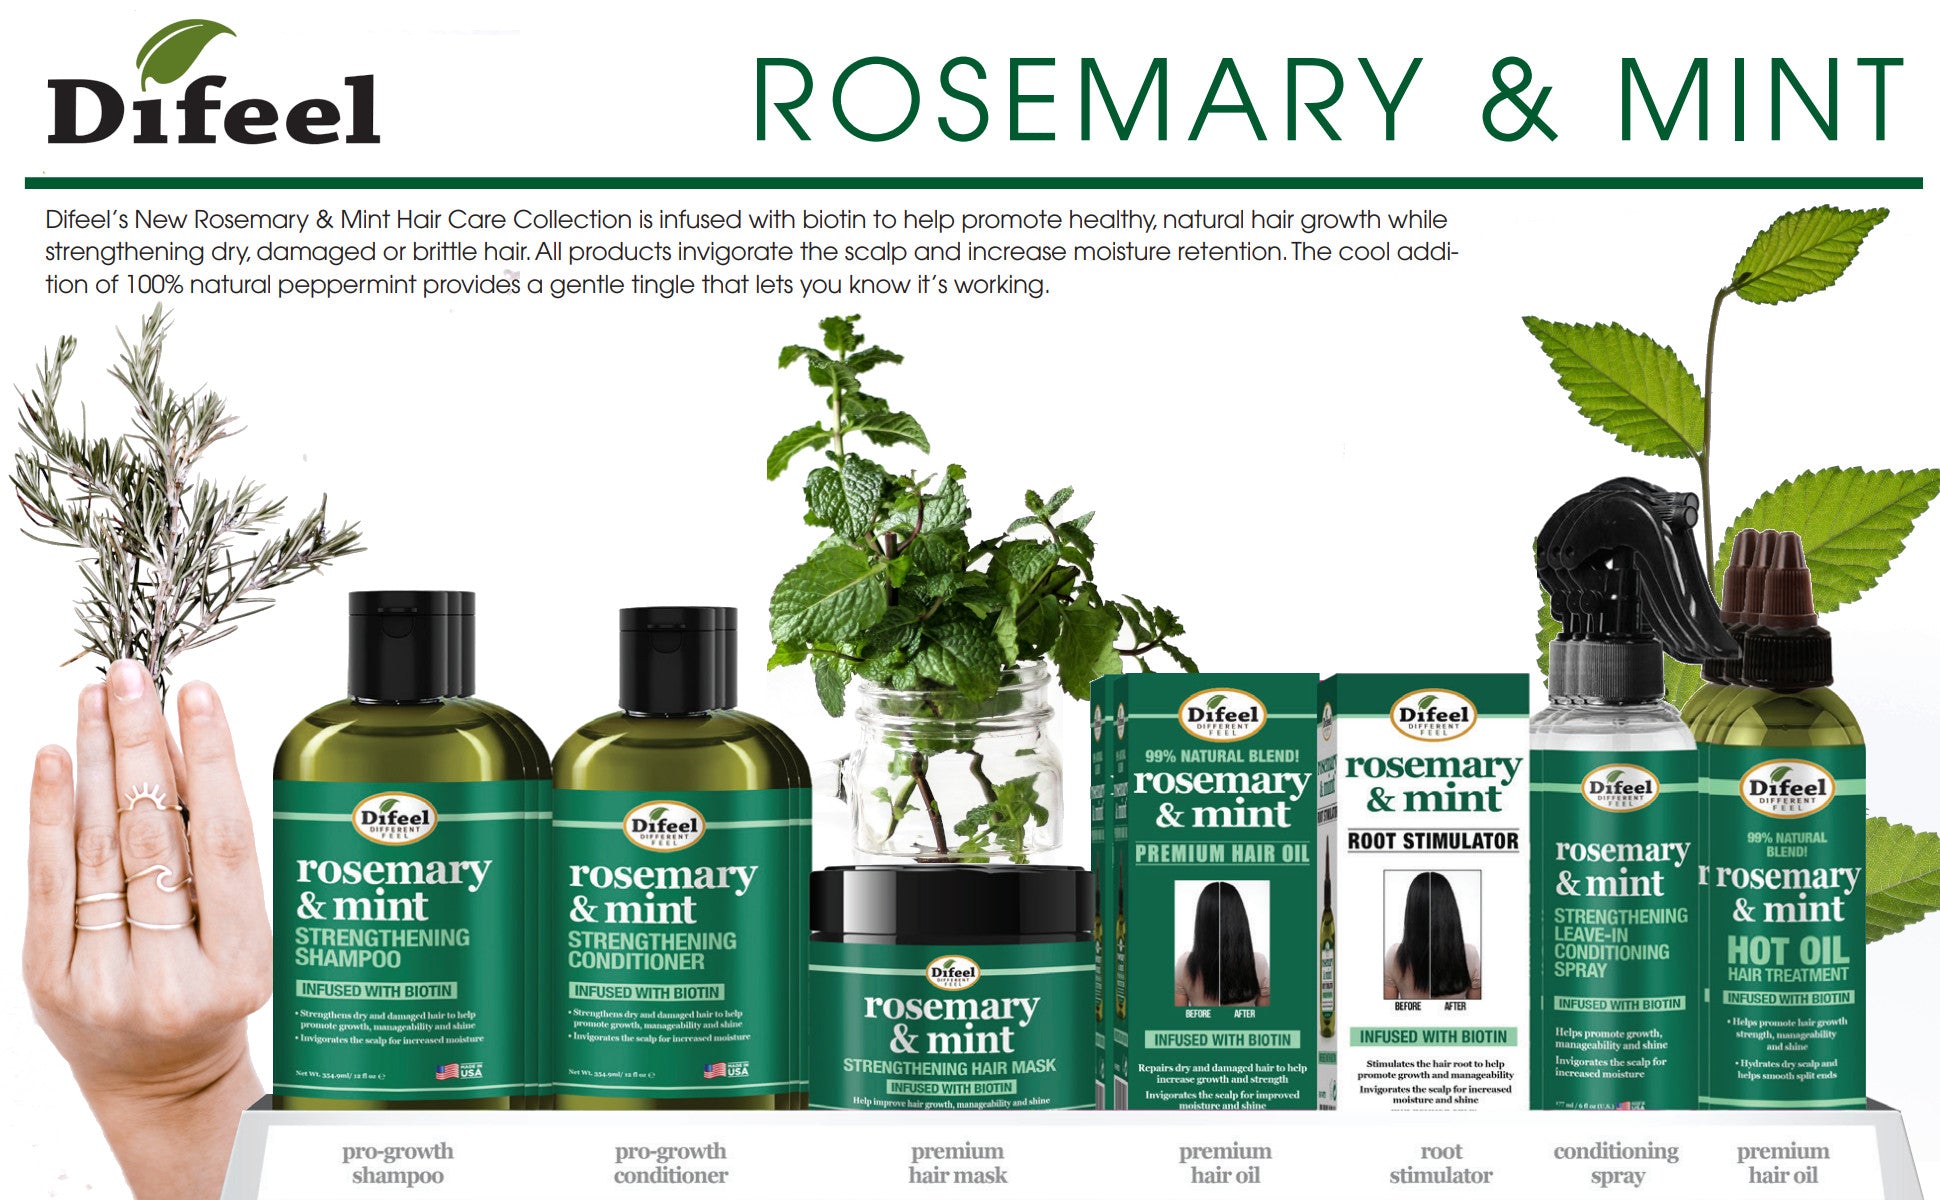 Difeel Rosemary and Mint Premium Hair Oil 8 oz.